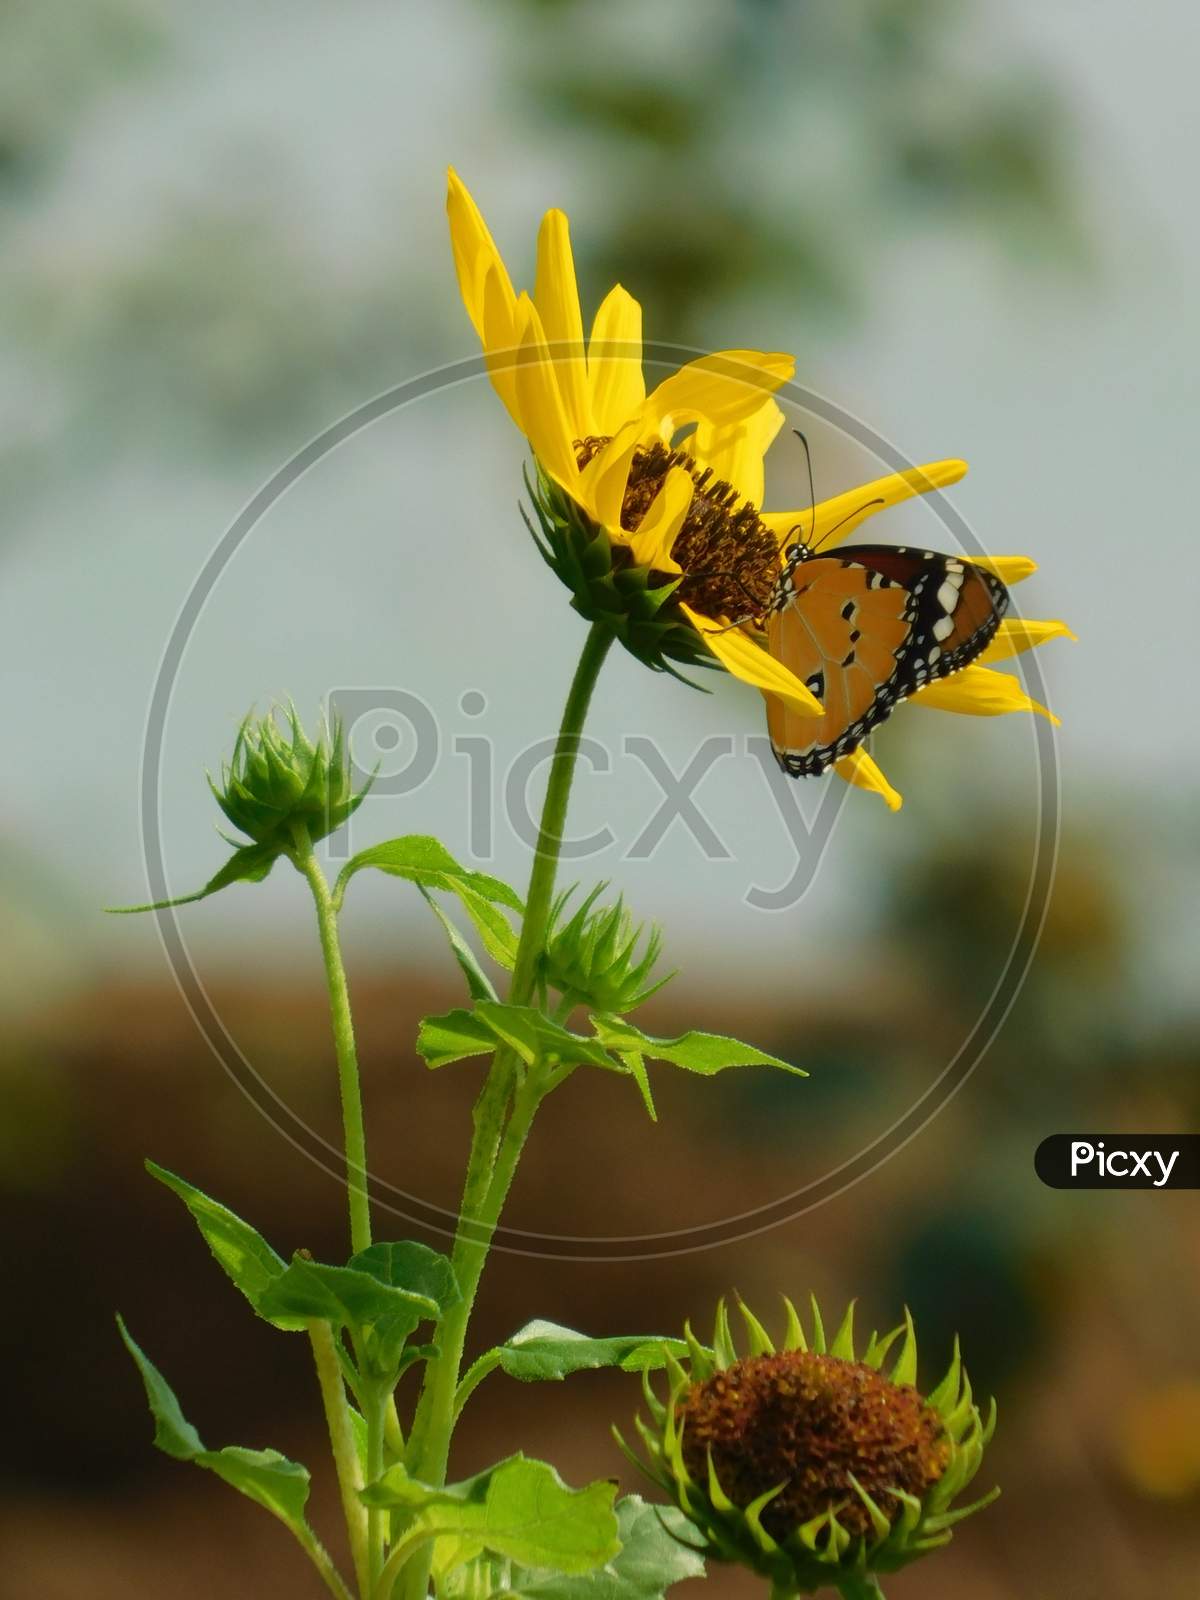 Butterfly on sunflower.